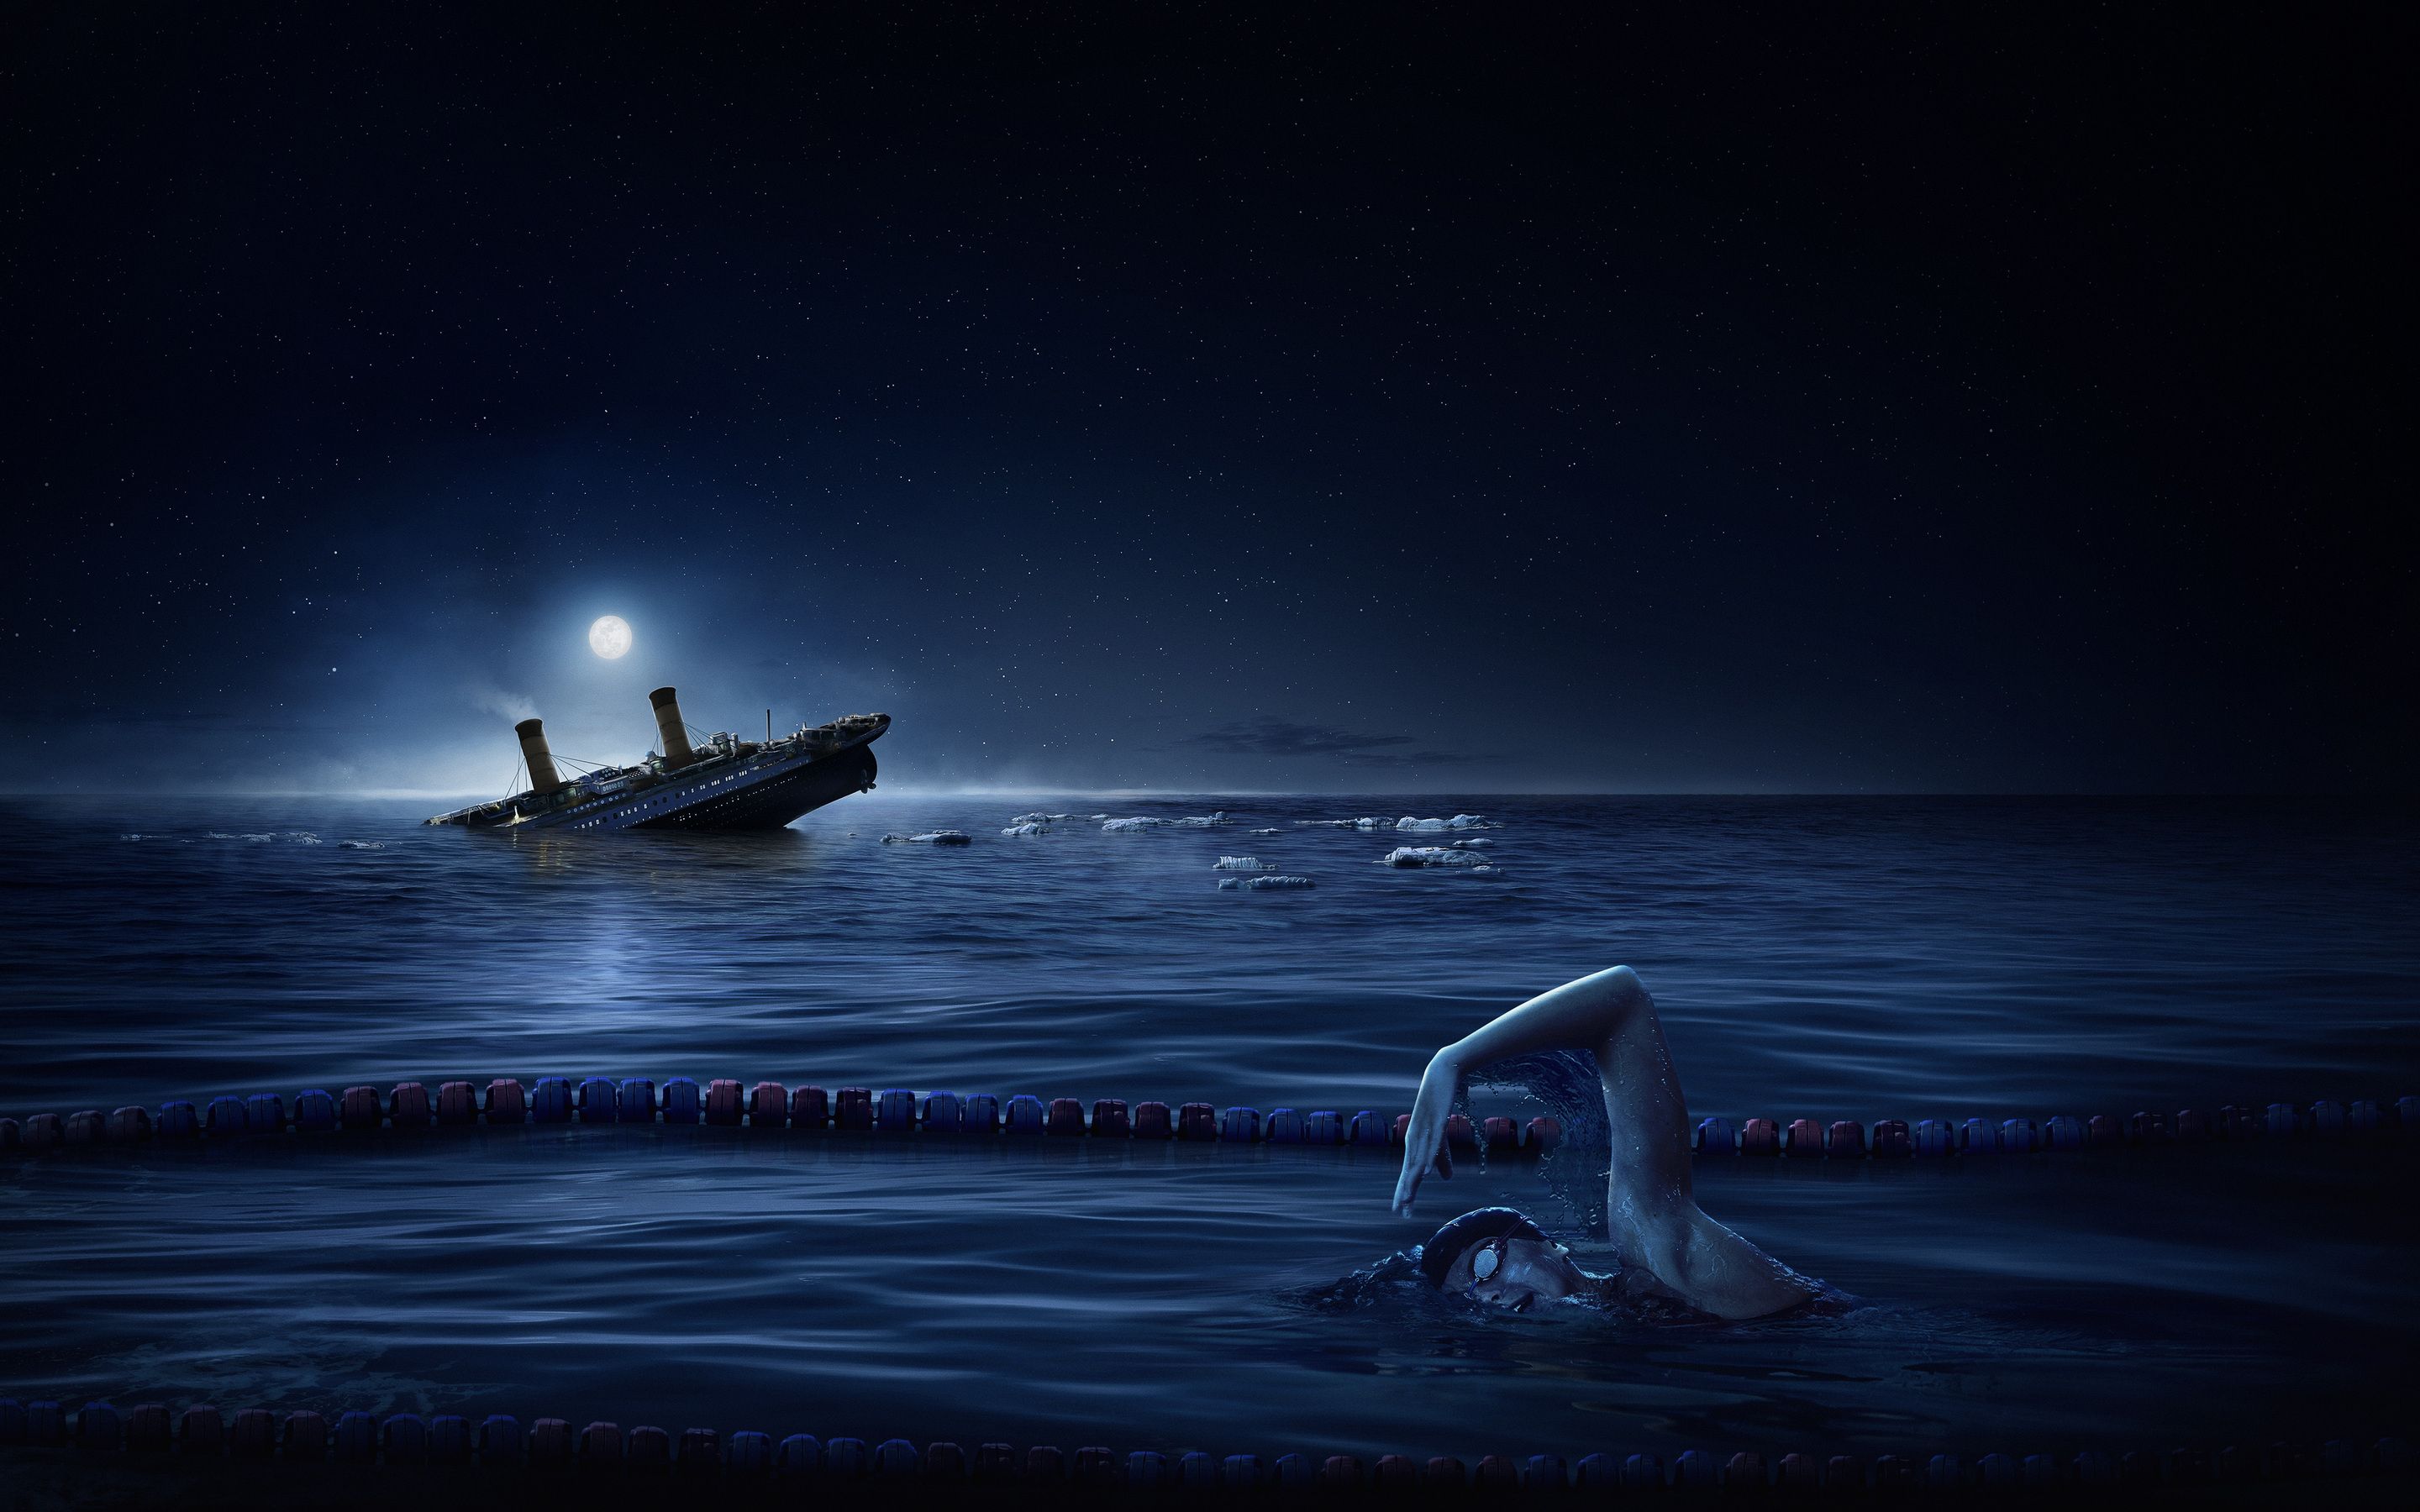 Titanic Ship Alongside Swimmer Macbook Pro Retina HD 4k Wallpaper, Image, Background, Photo and Picture